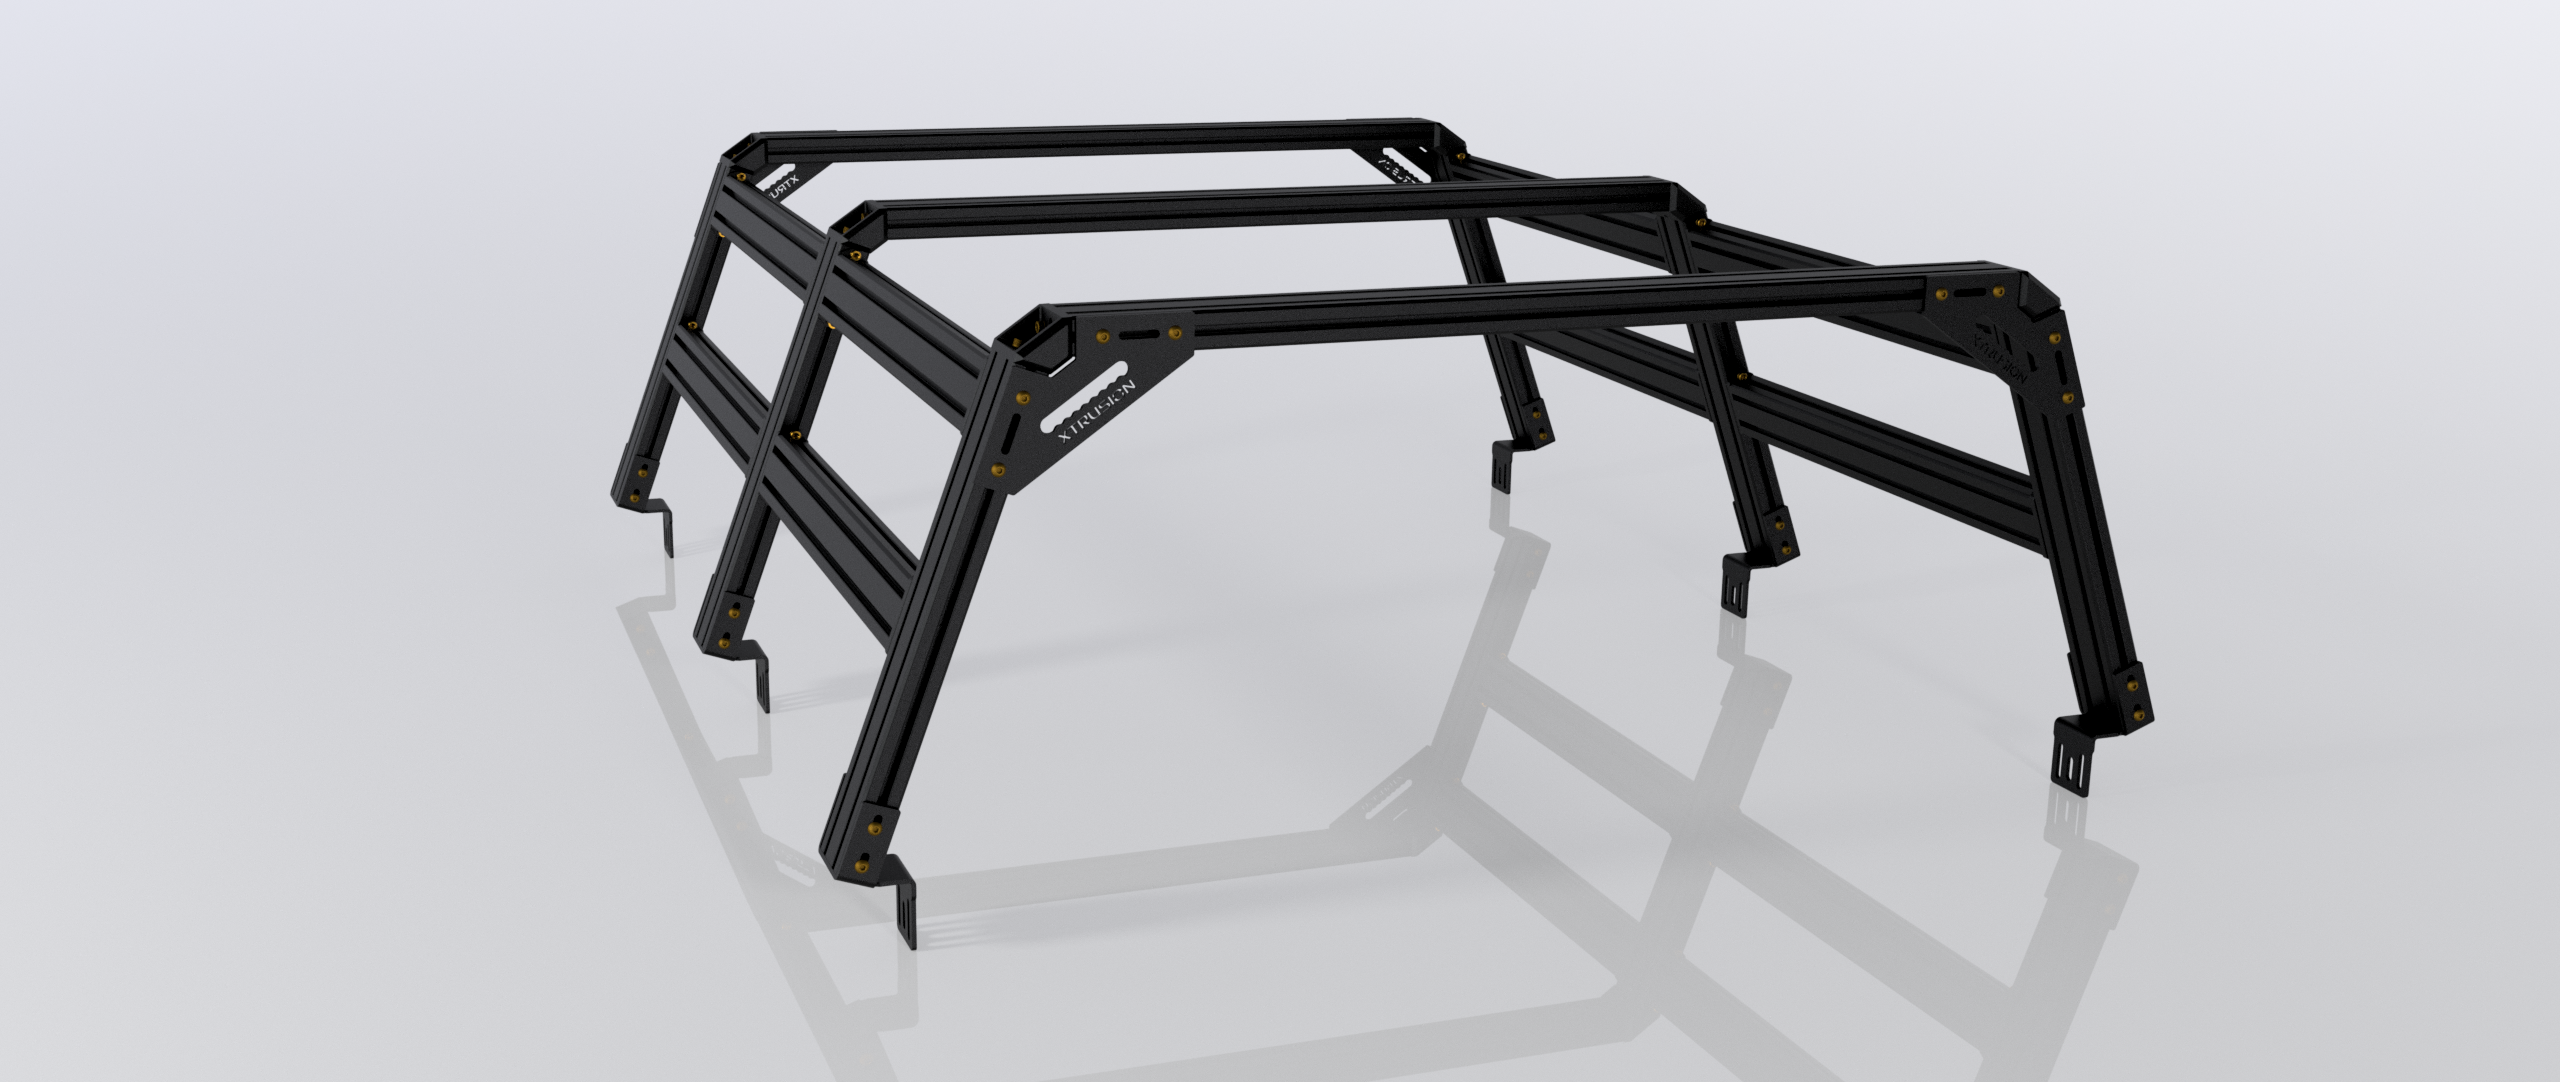 XTR3 Bed Rack for Silverado & Sierra 1500